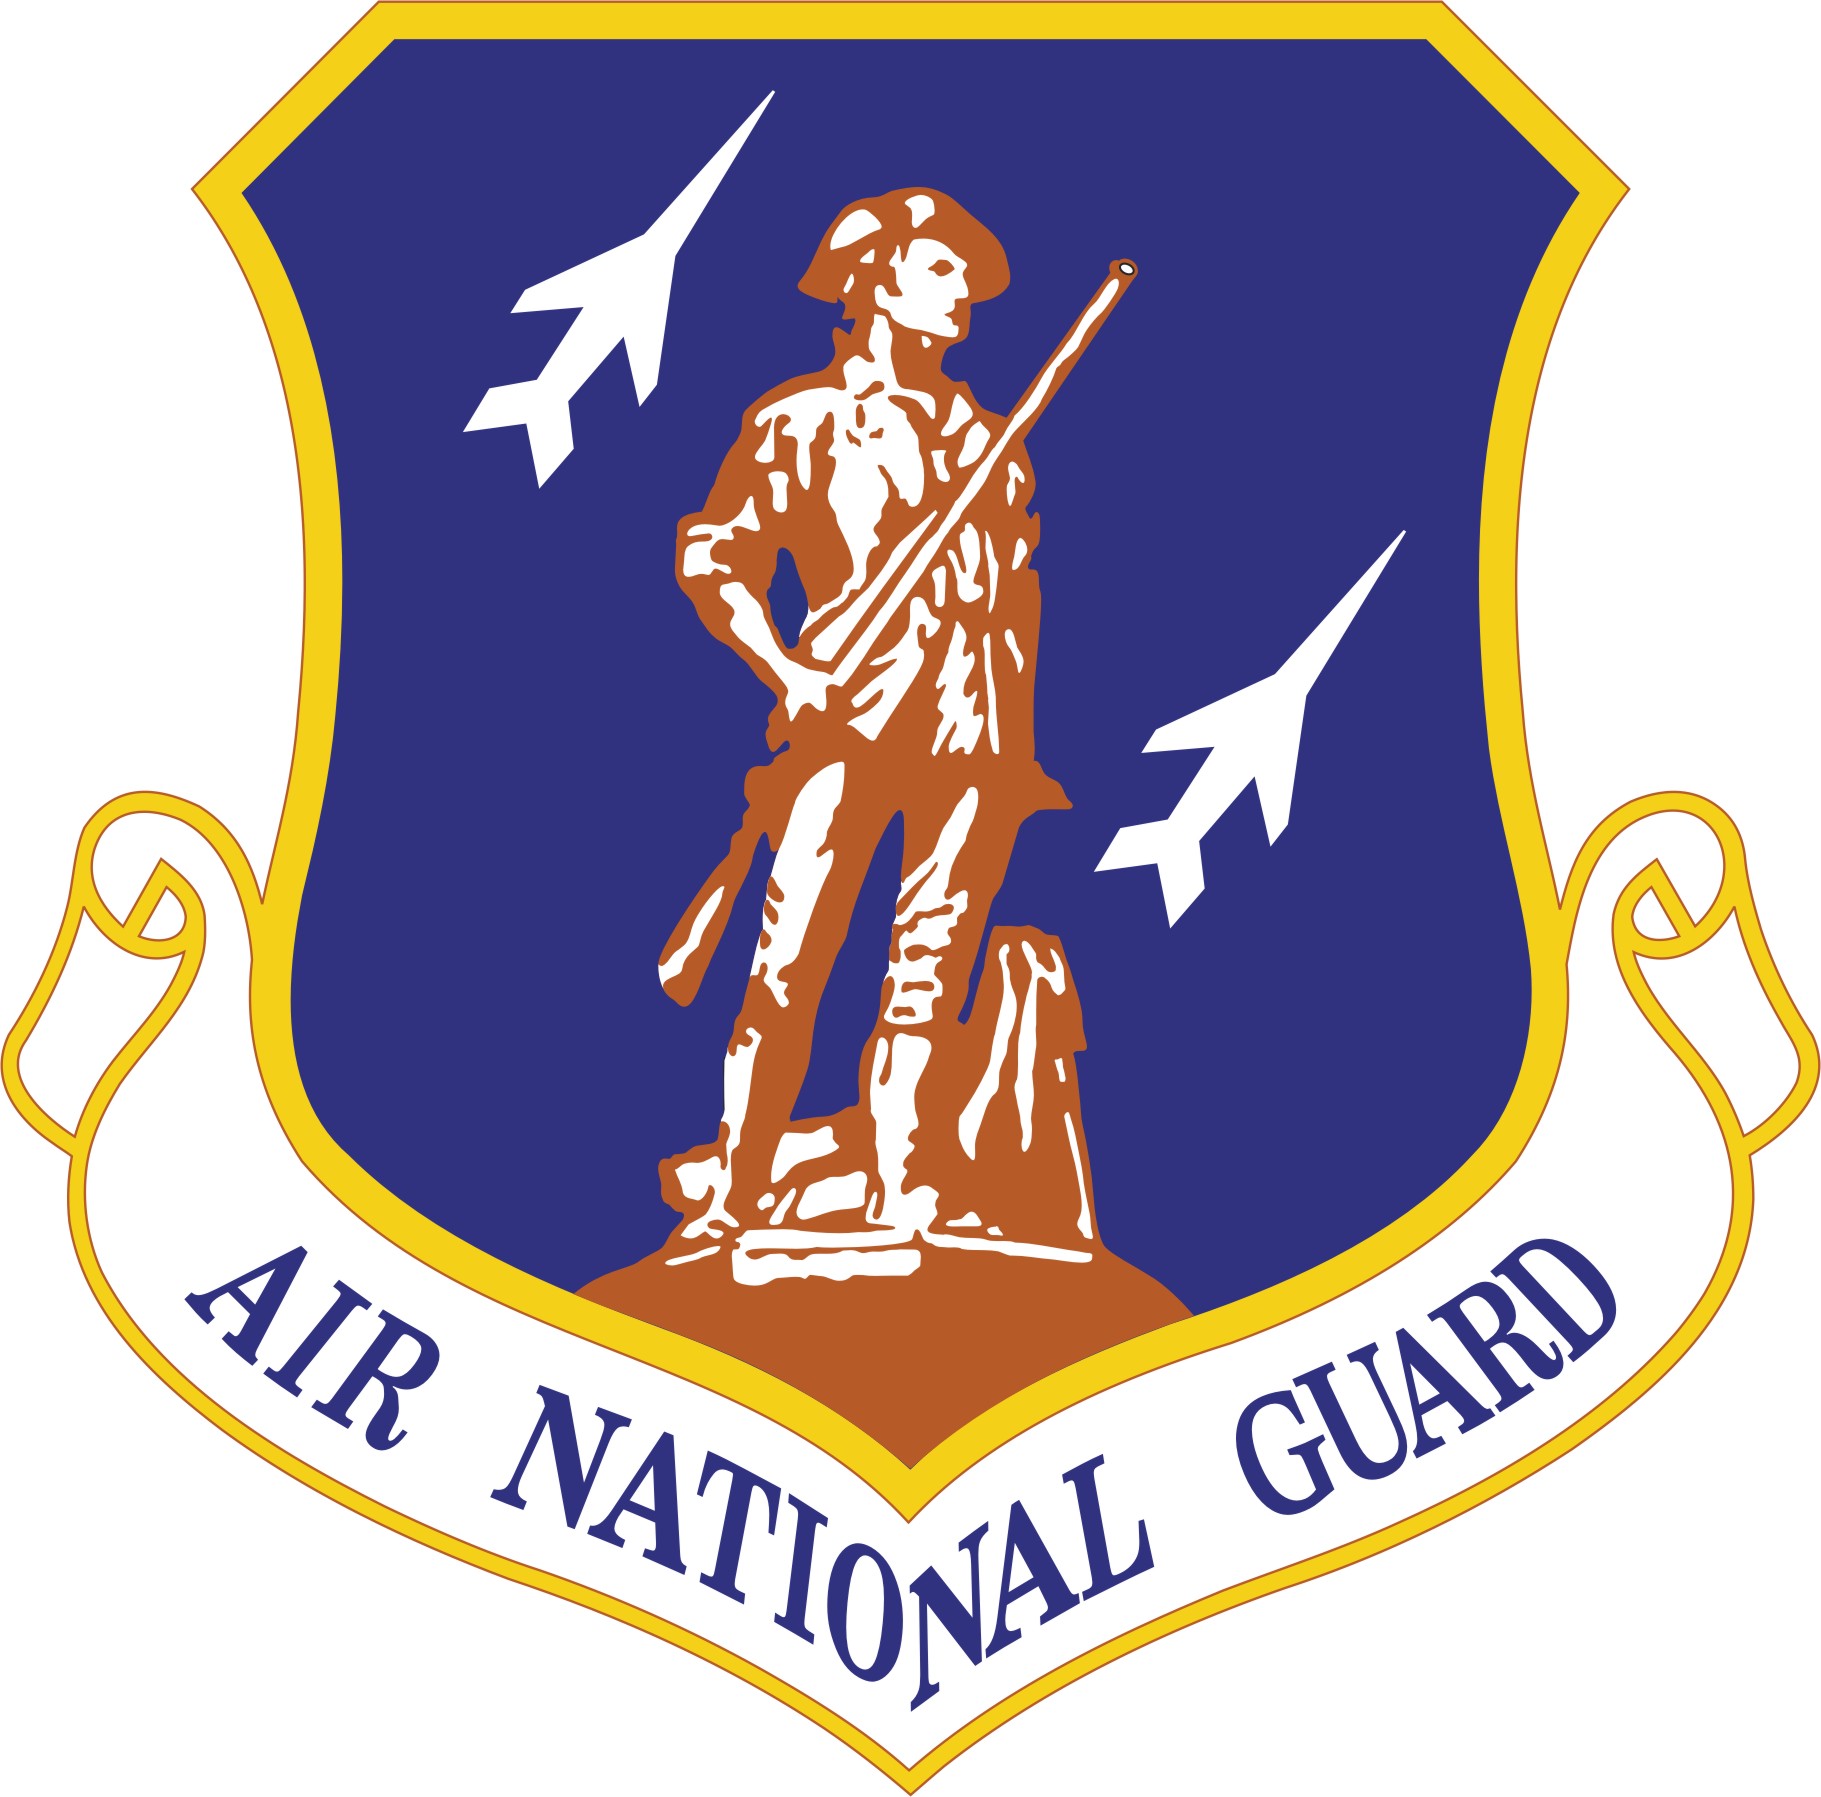 Headquarters, NY Air National Guard unit crest